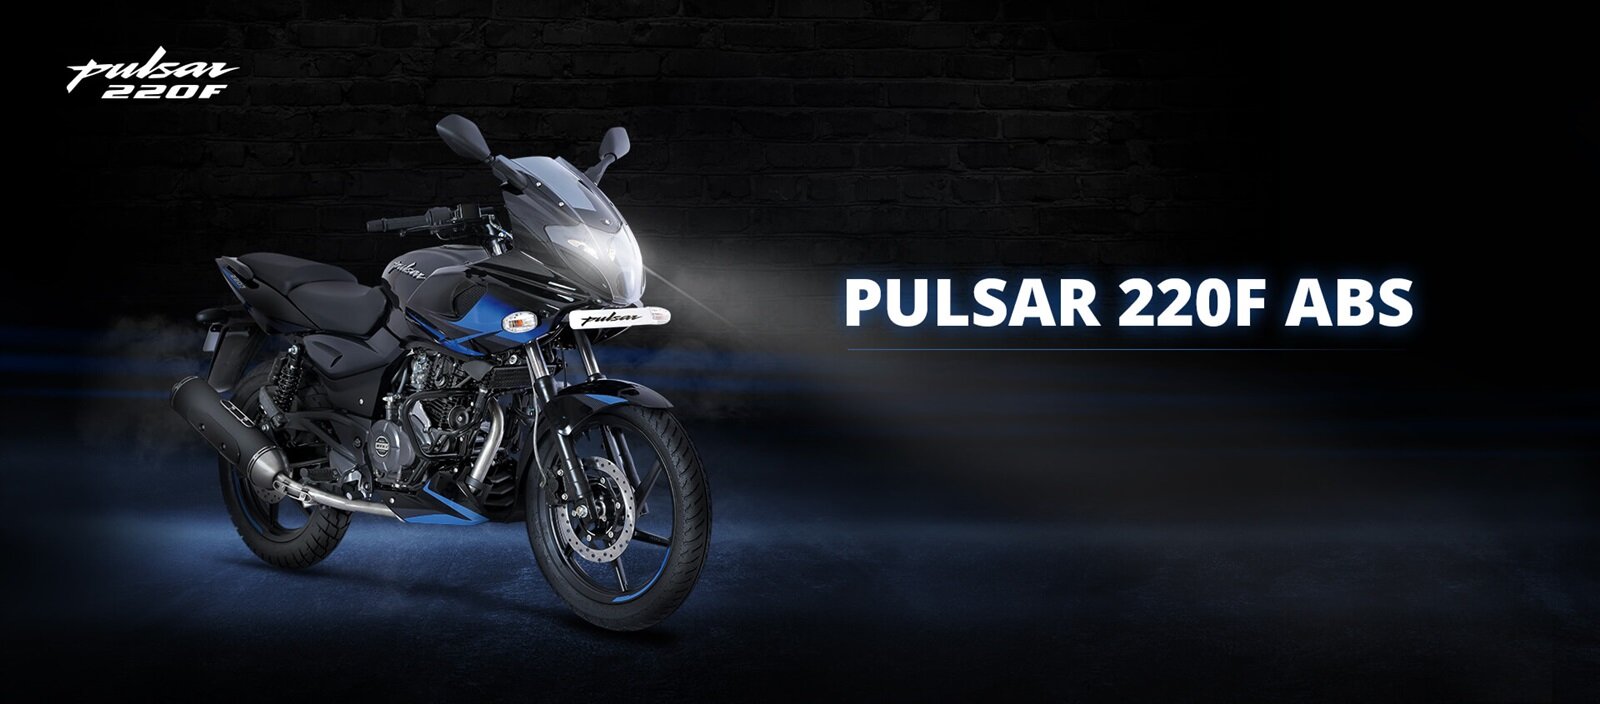 Pulsar 220f Abs New Model 2019 Price